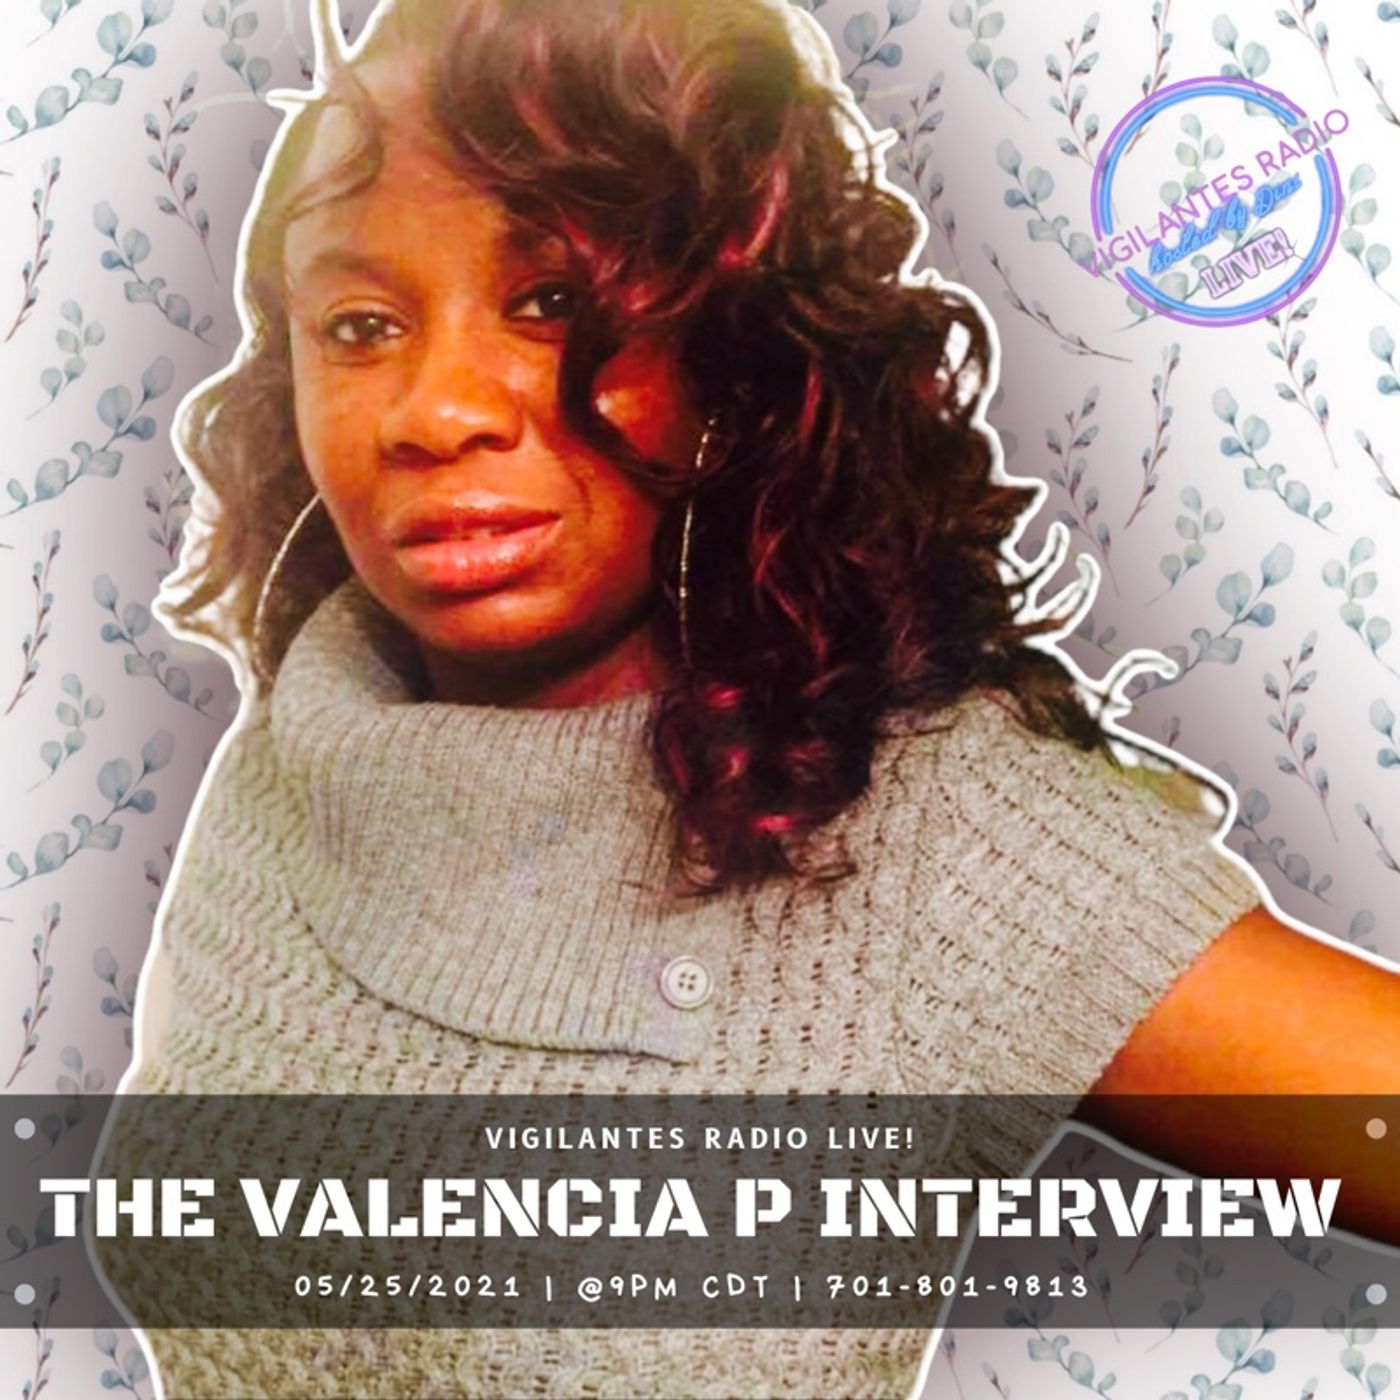 The Valencia P Interview. Image